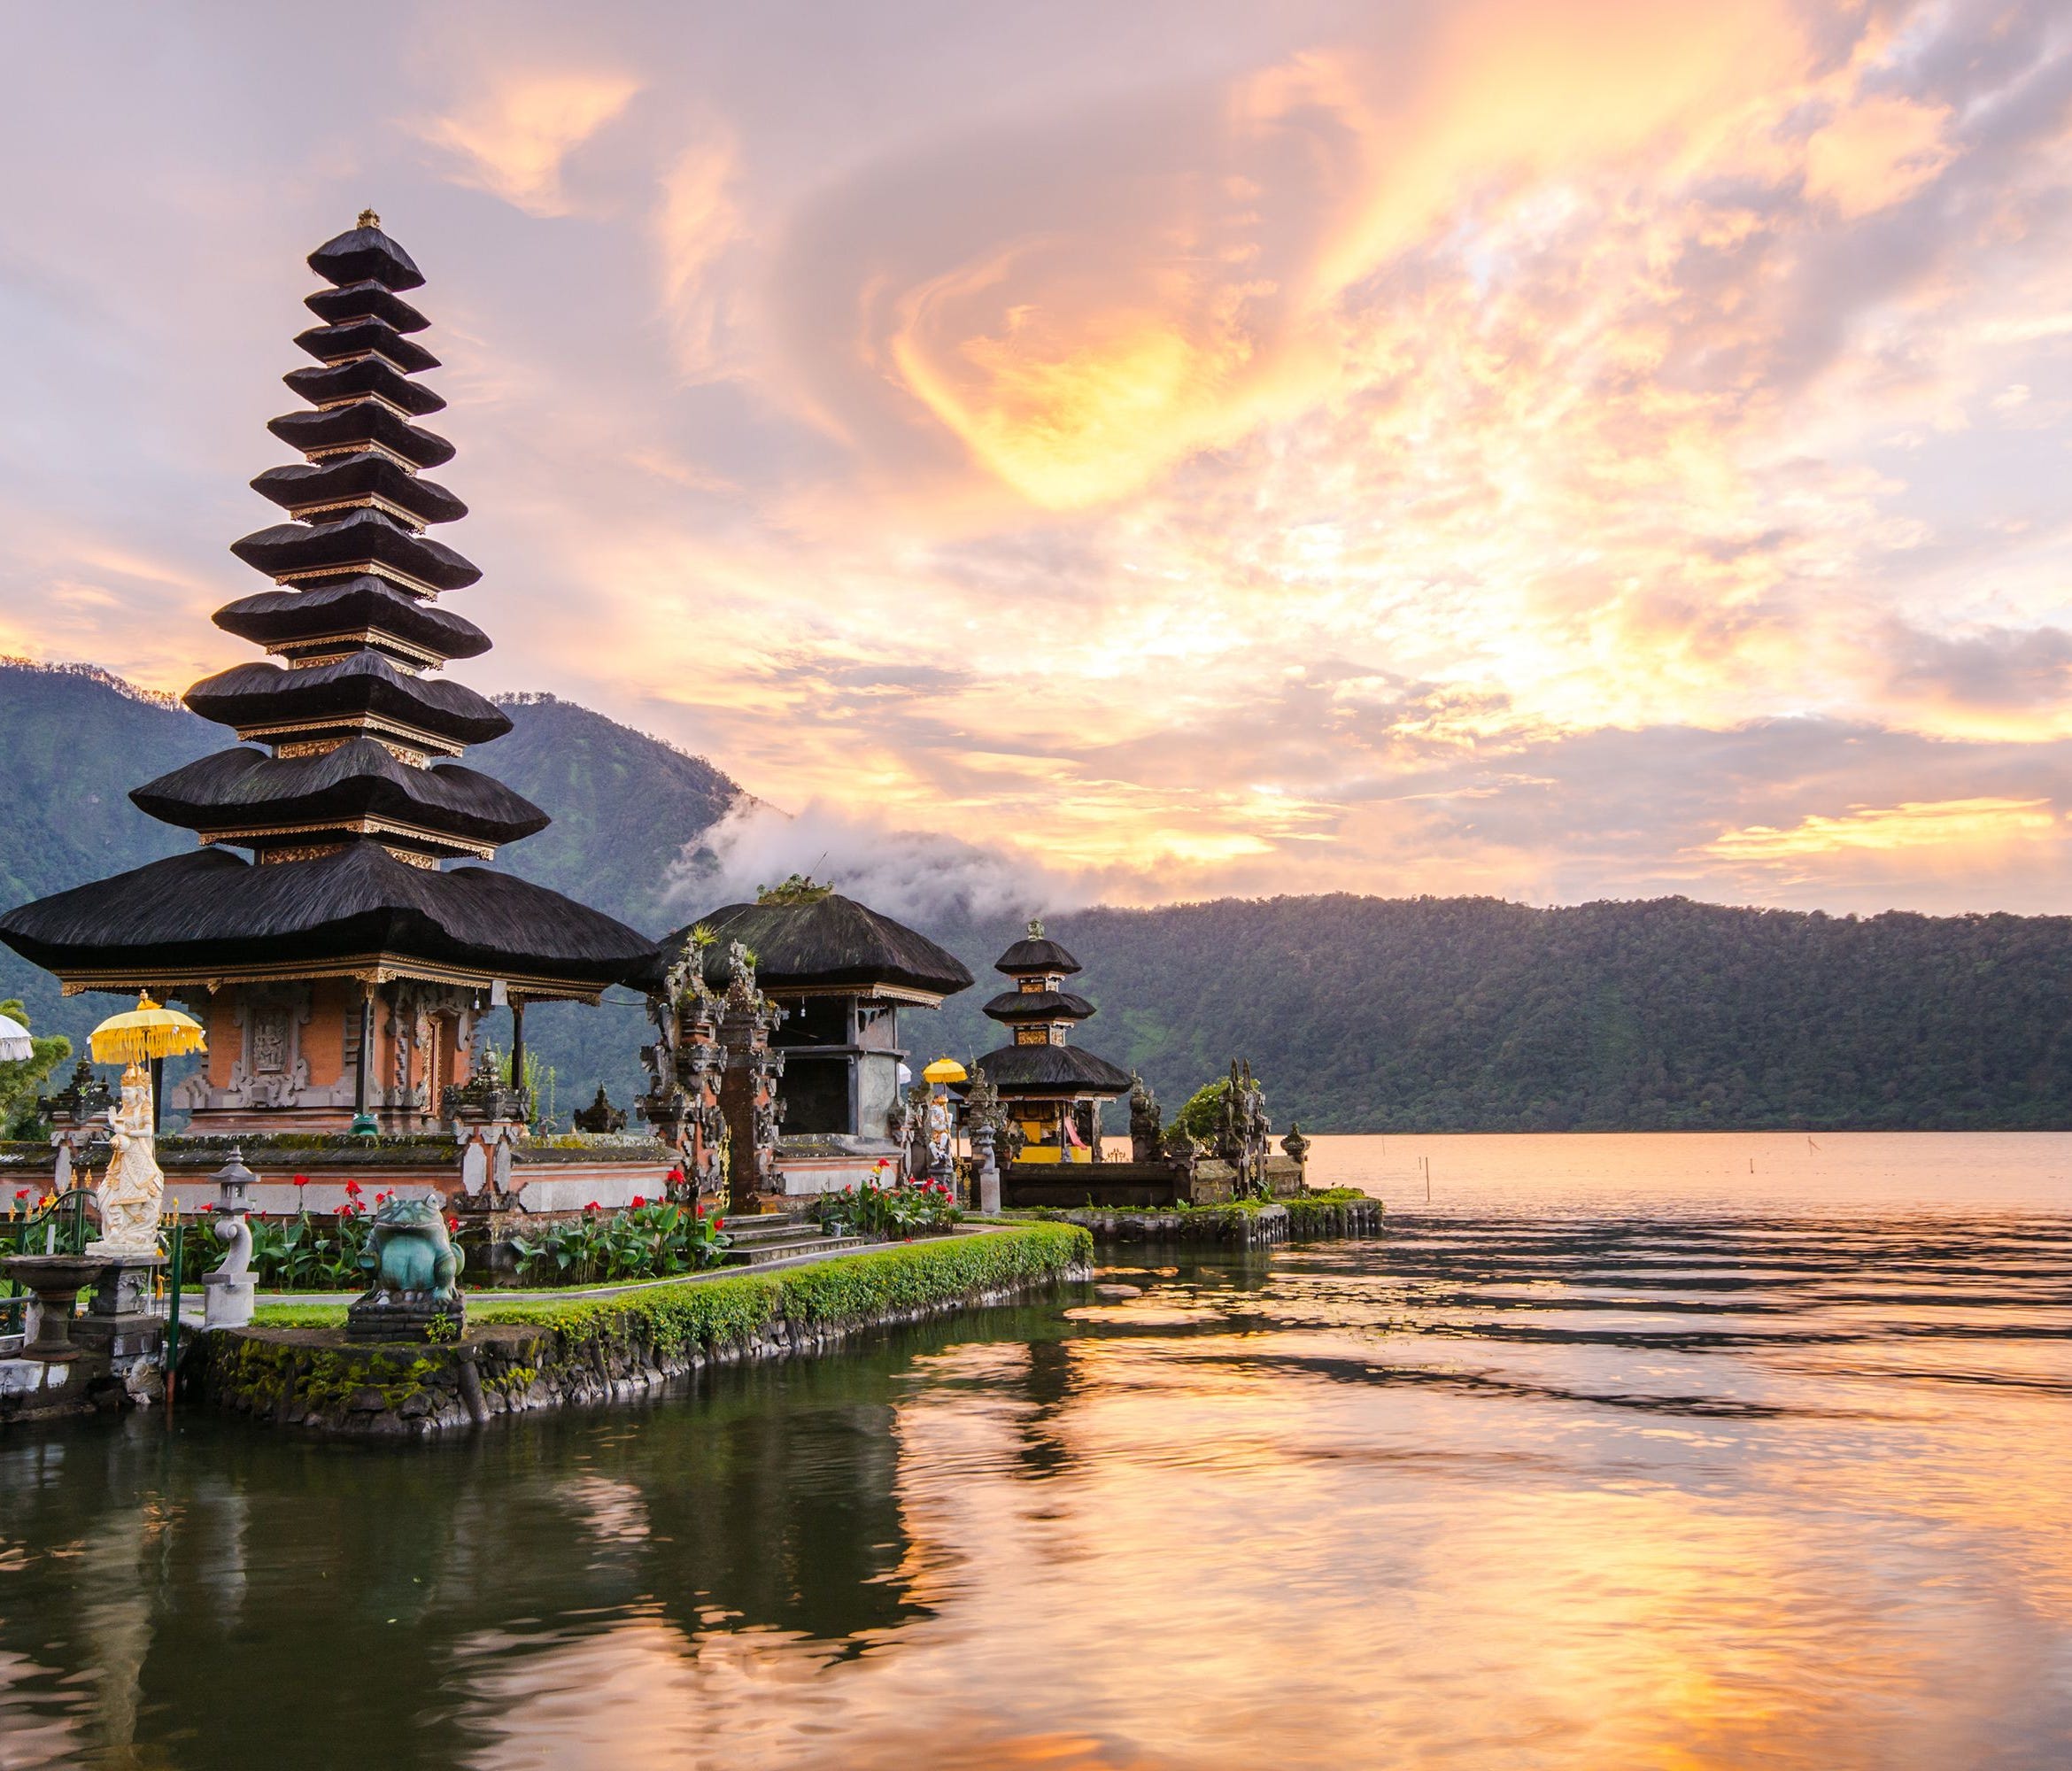 According to TripAdvisor's latest Traveler's Choice awards, 1. Bali, Indonesia, is the No. 1 international destination.